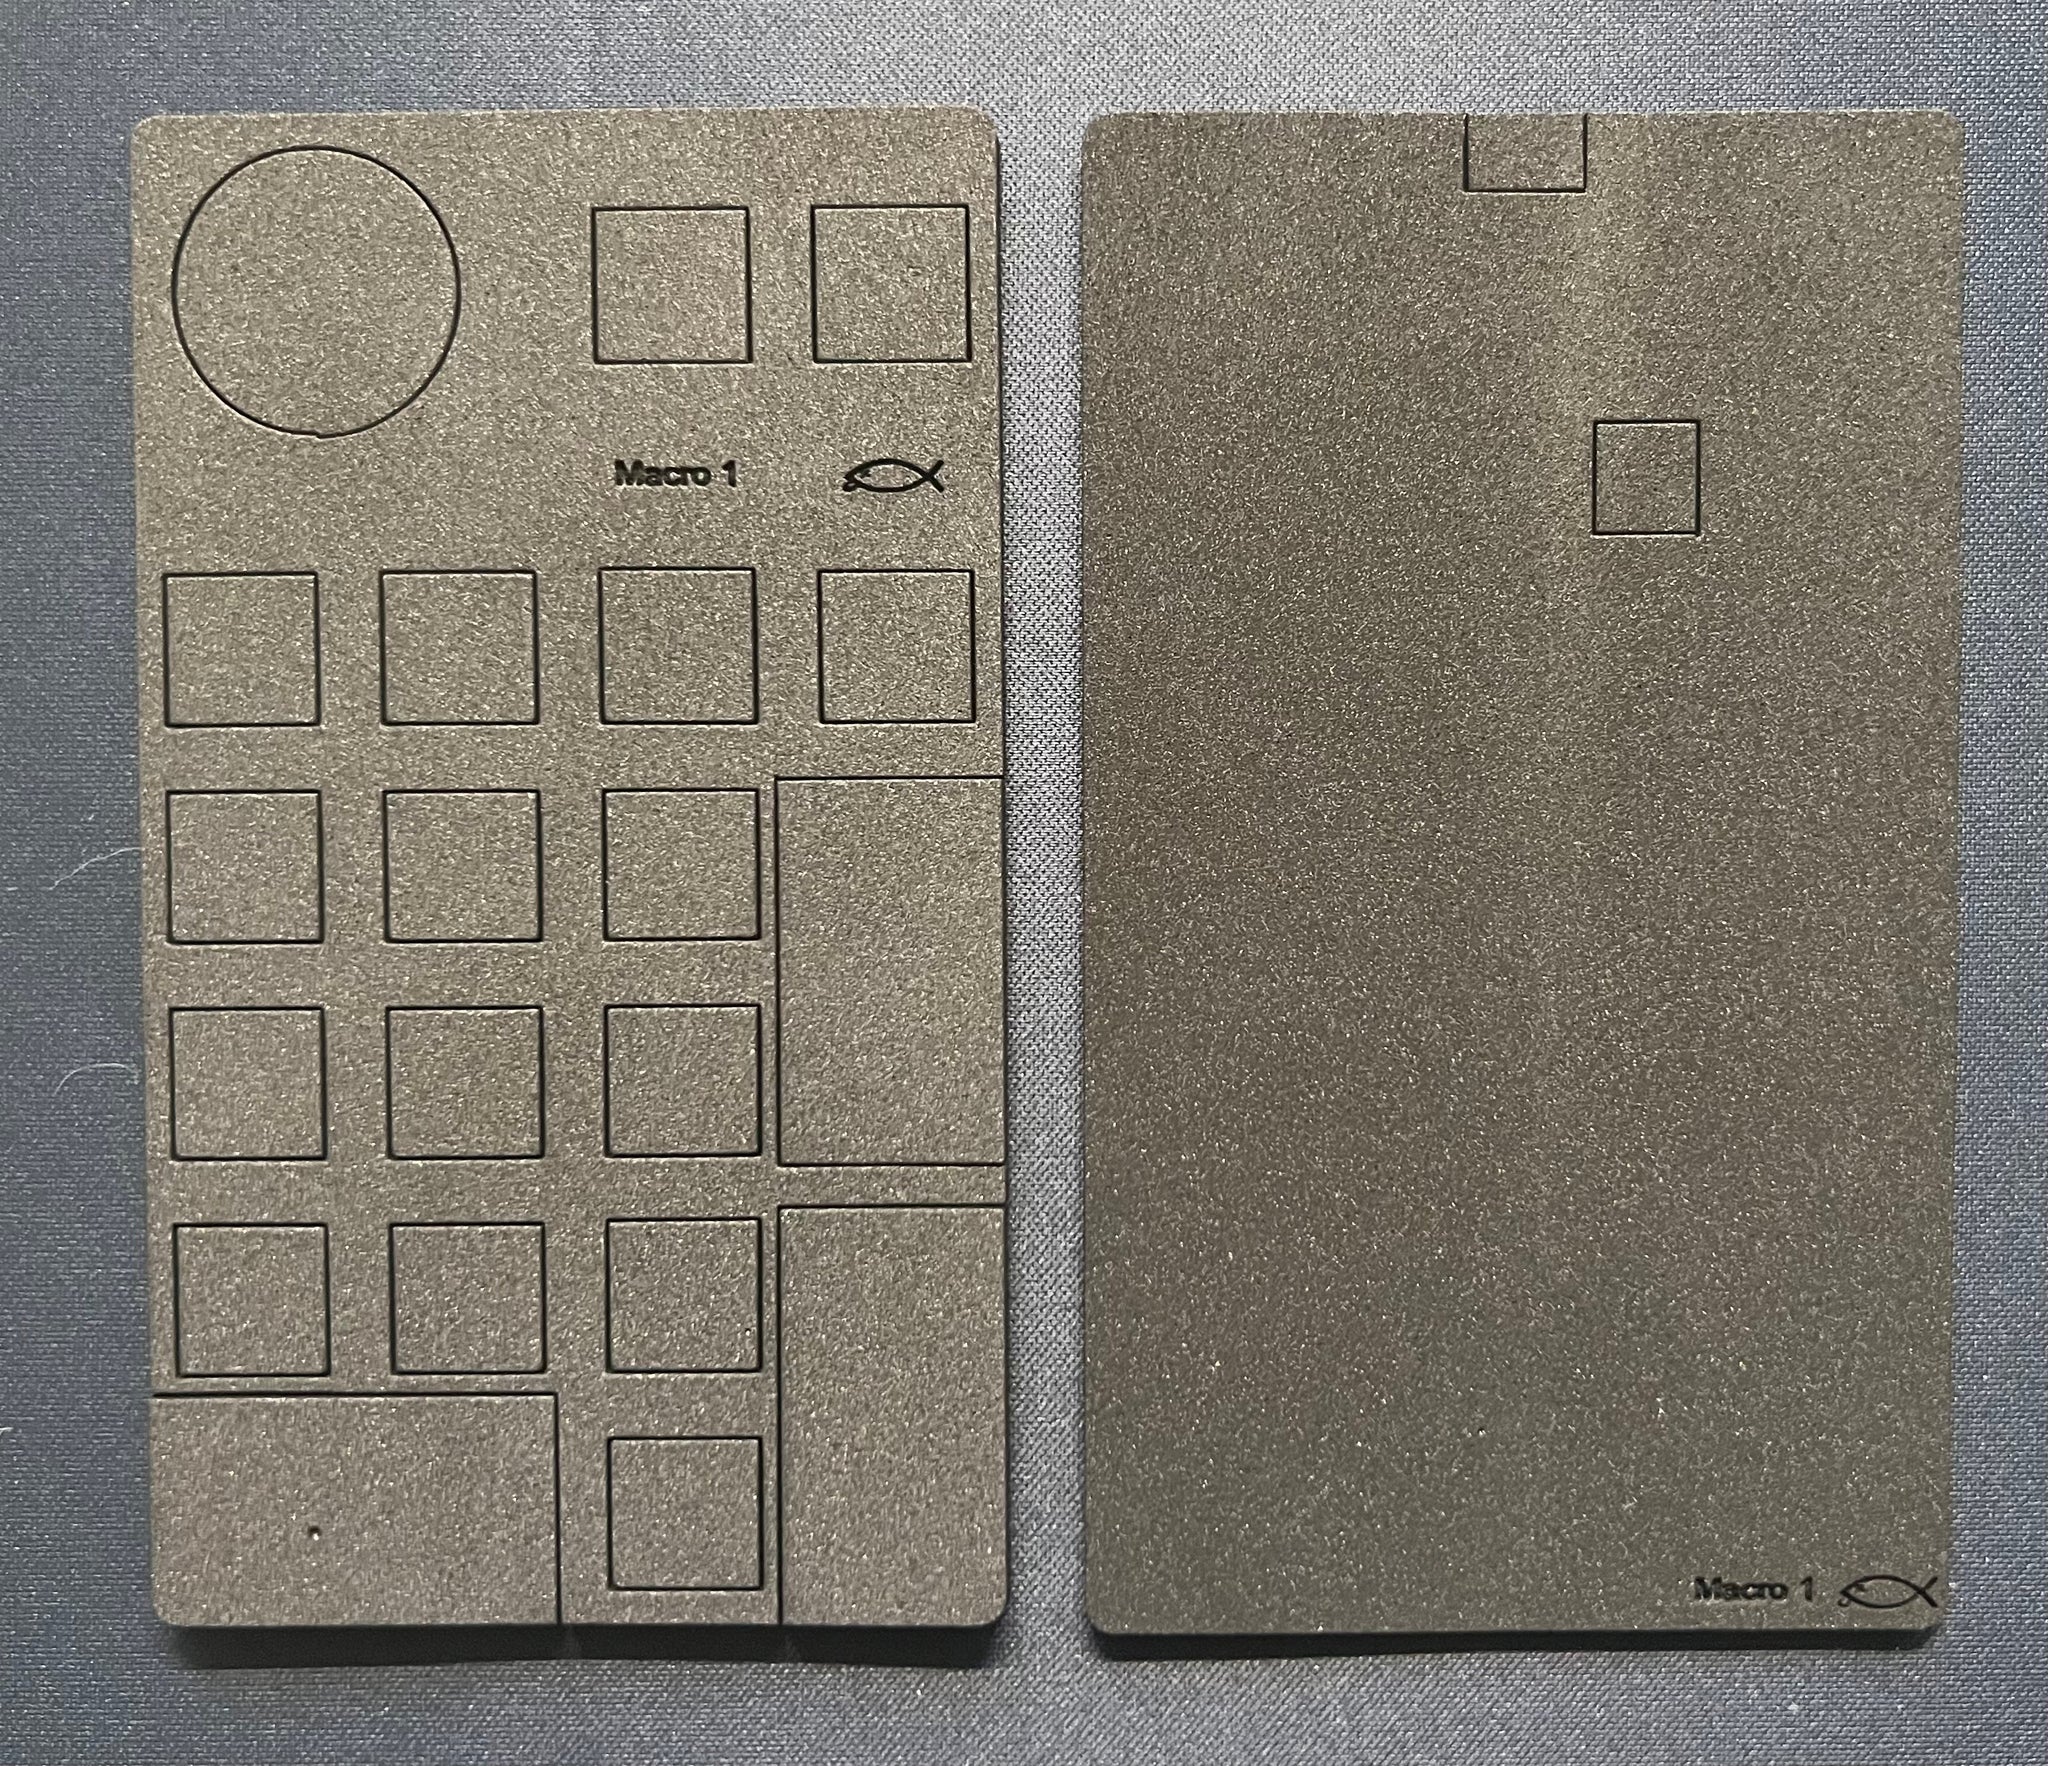 Laneware Macro-1 case and plate foam set